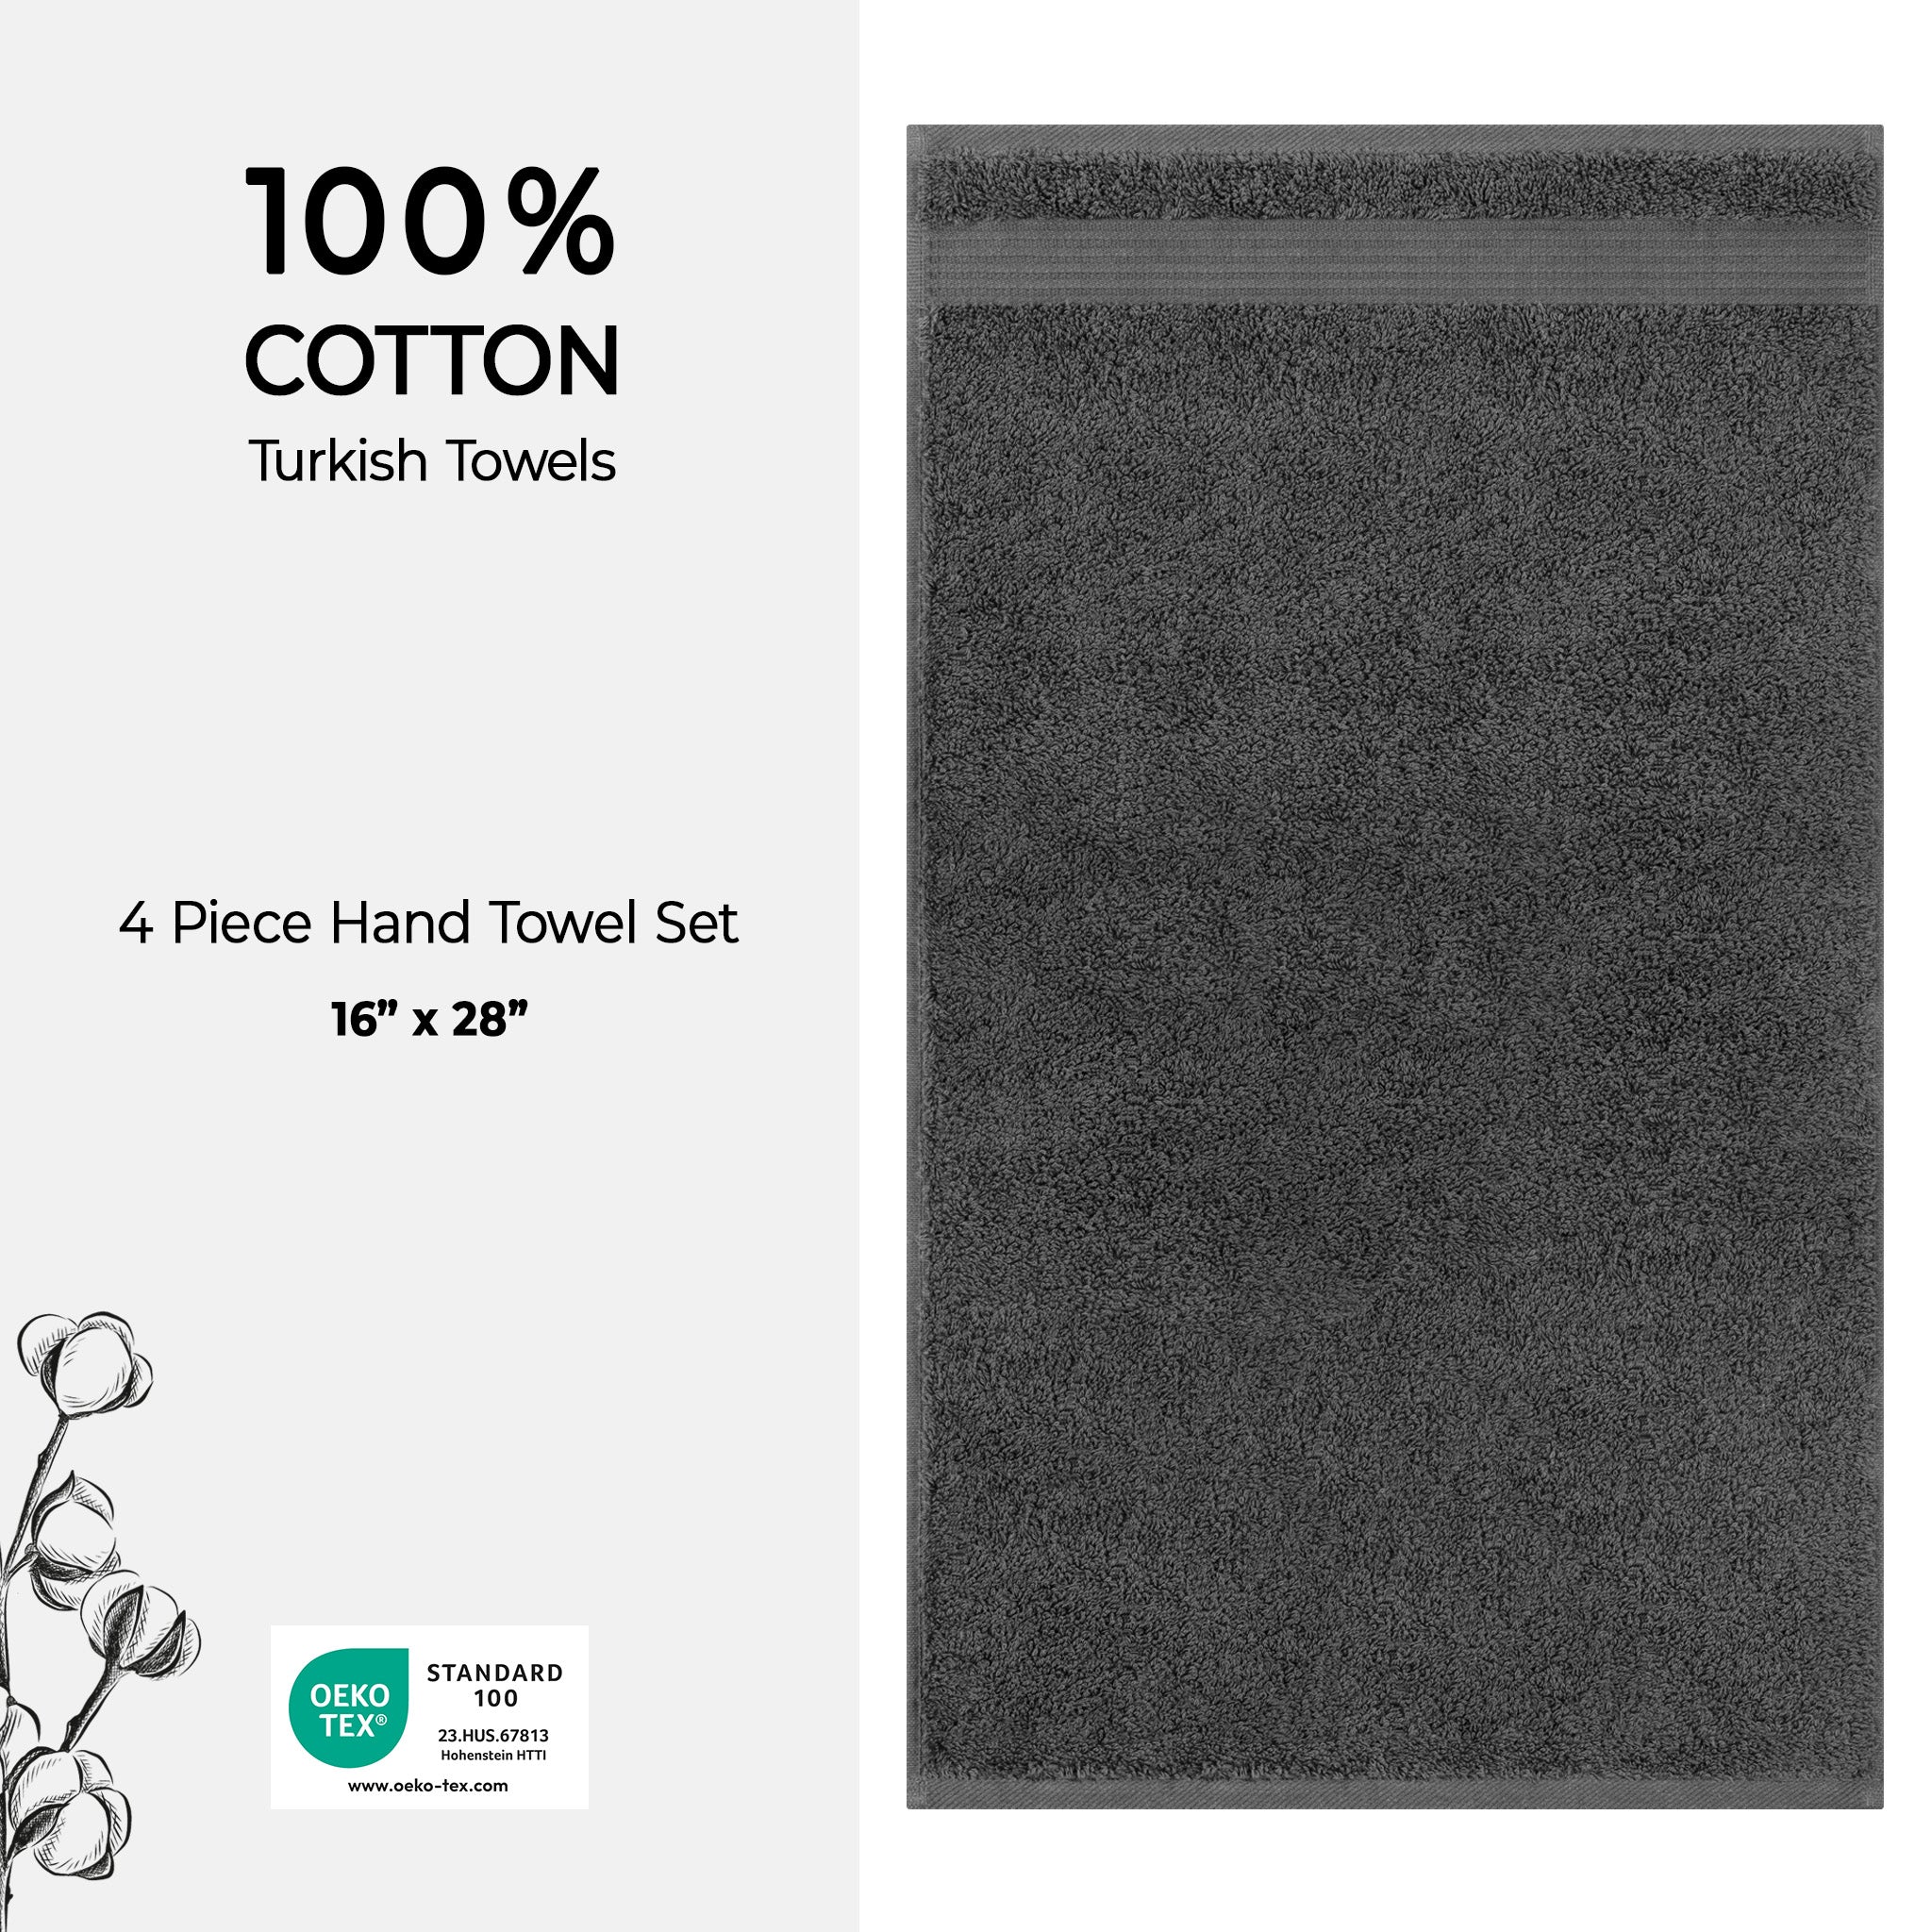 American Soft Linen Bekos 100% Cotton Turkish Towels, 4 Piece Hand Towel Set -gray-04